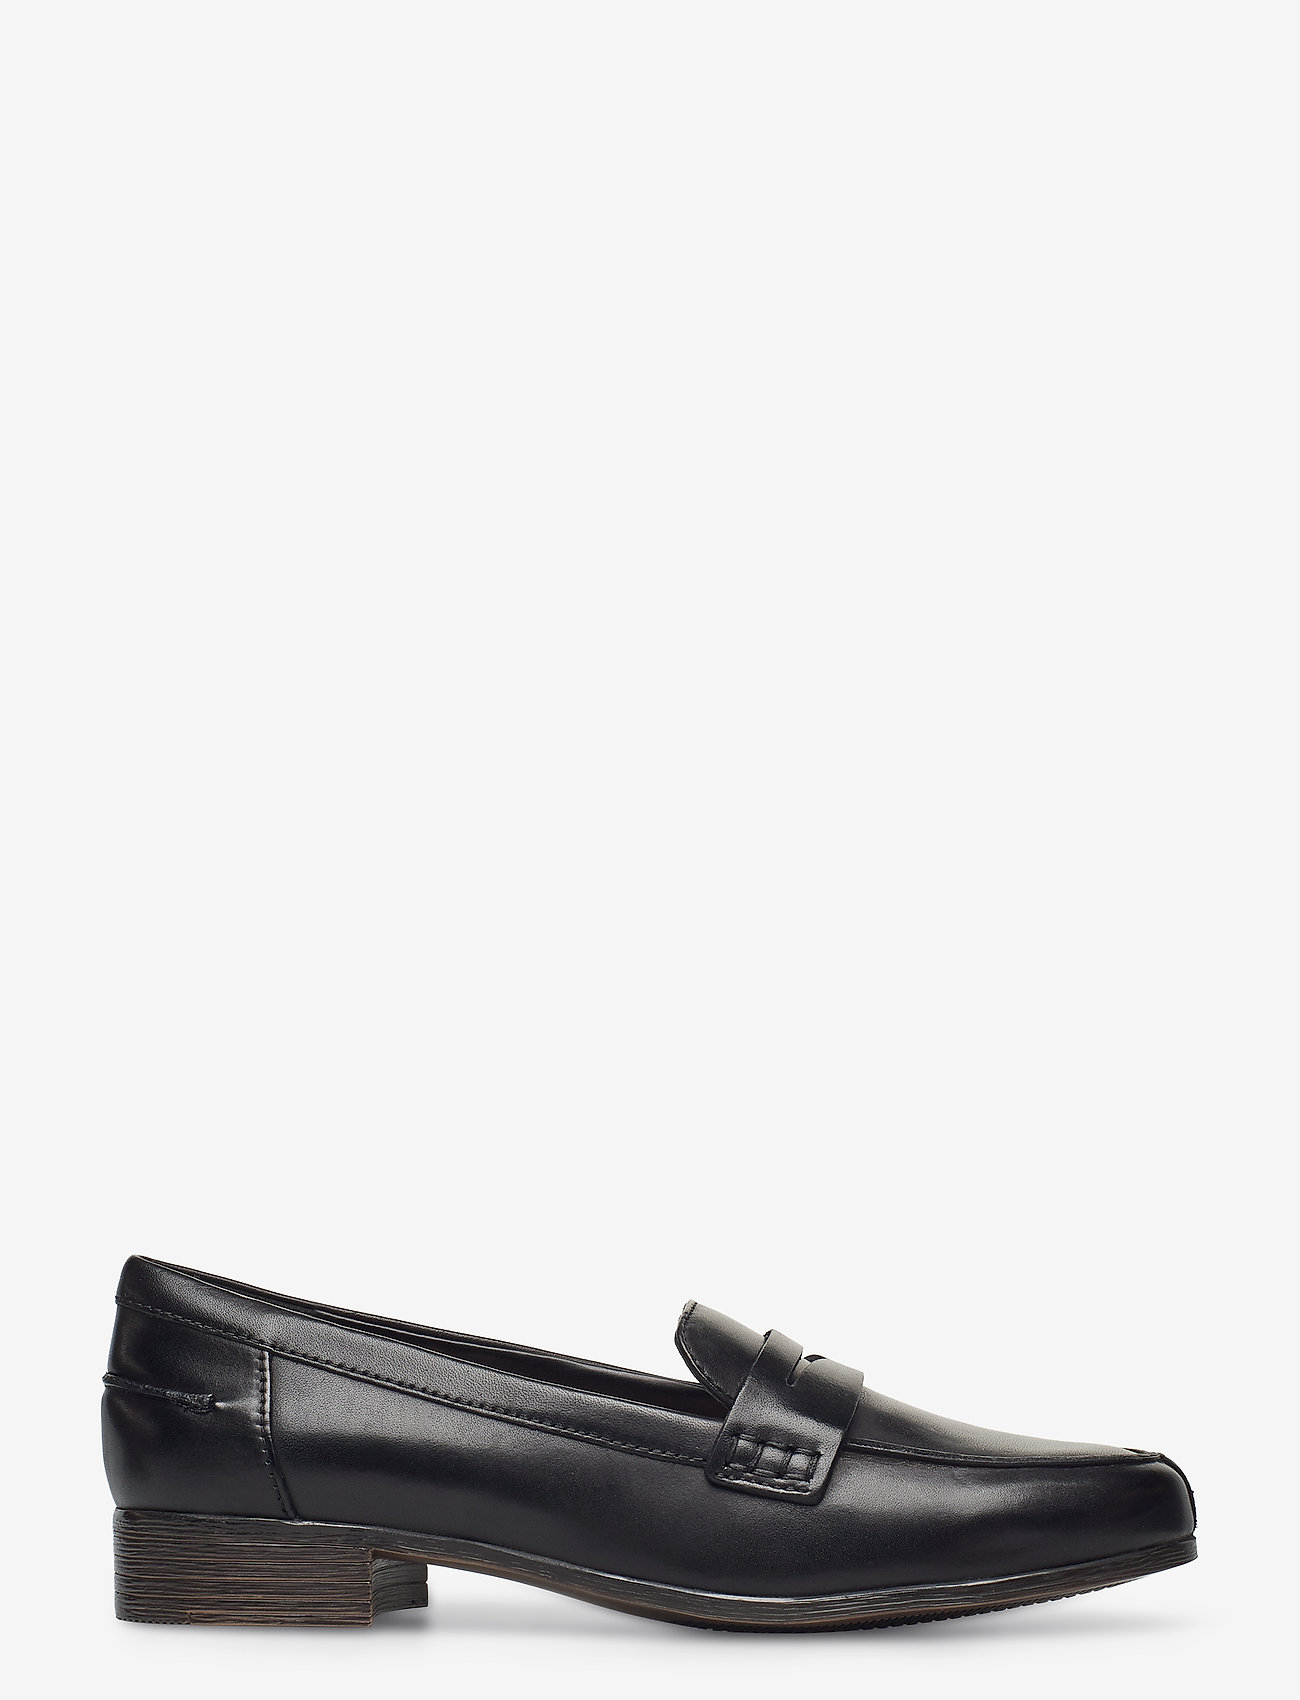 Clarks - Hamble Loafer - black leather - 1